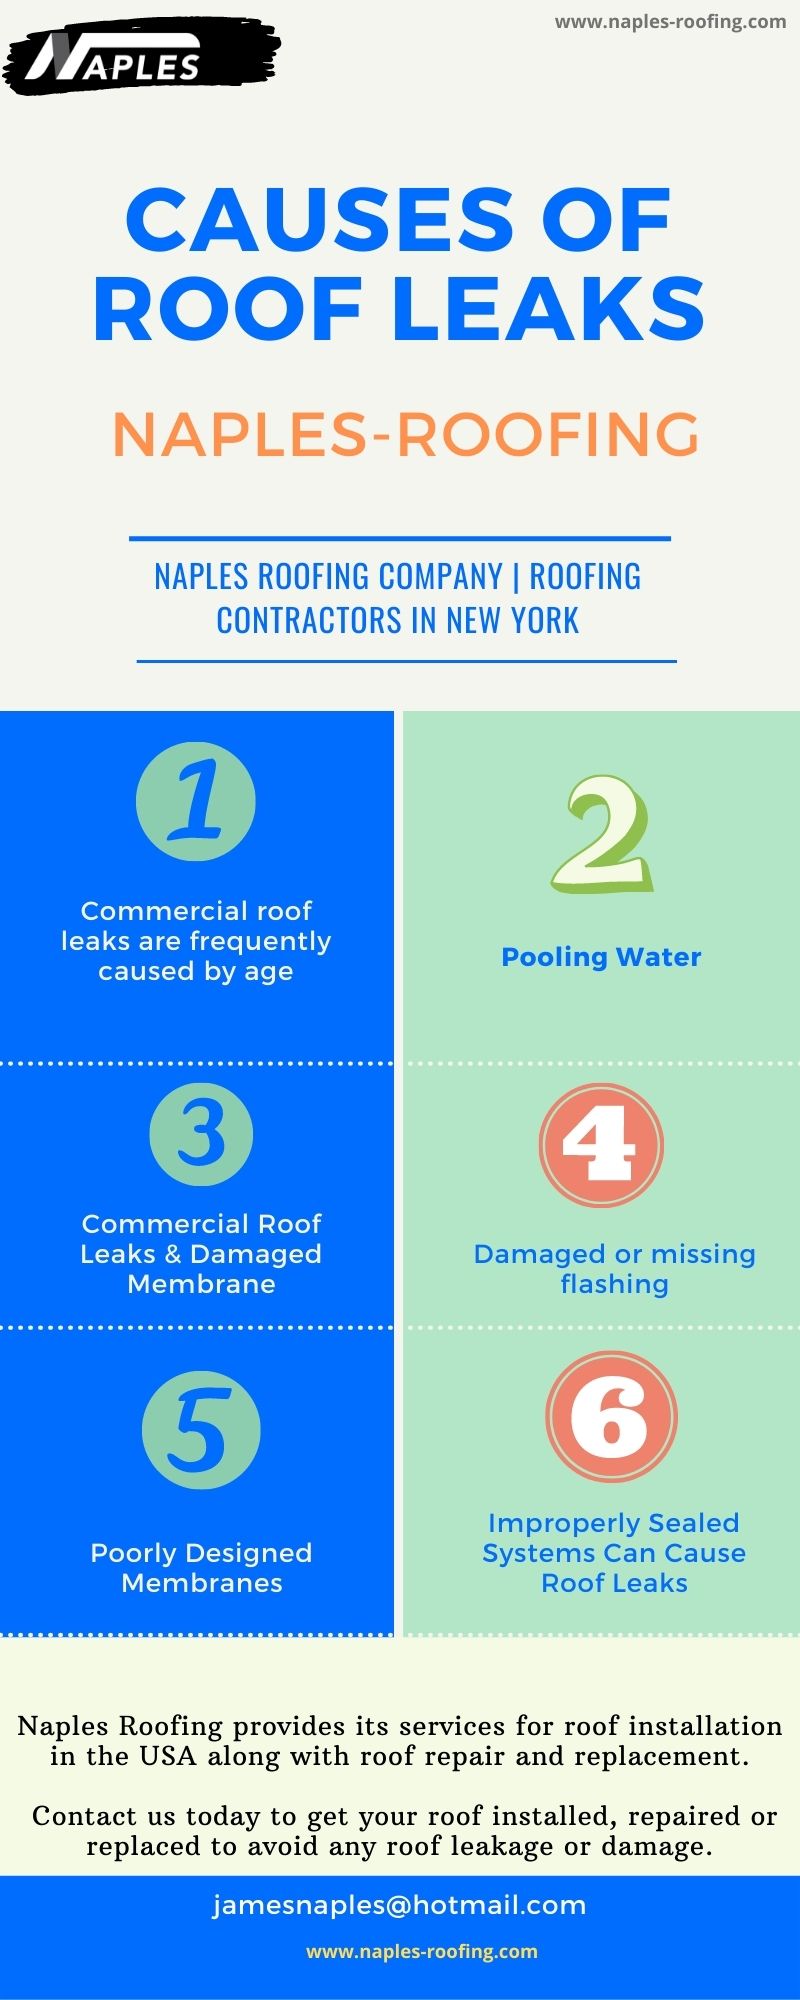 Causes of Roof Leaks.jpg  by naplesroofing